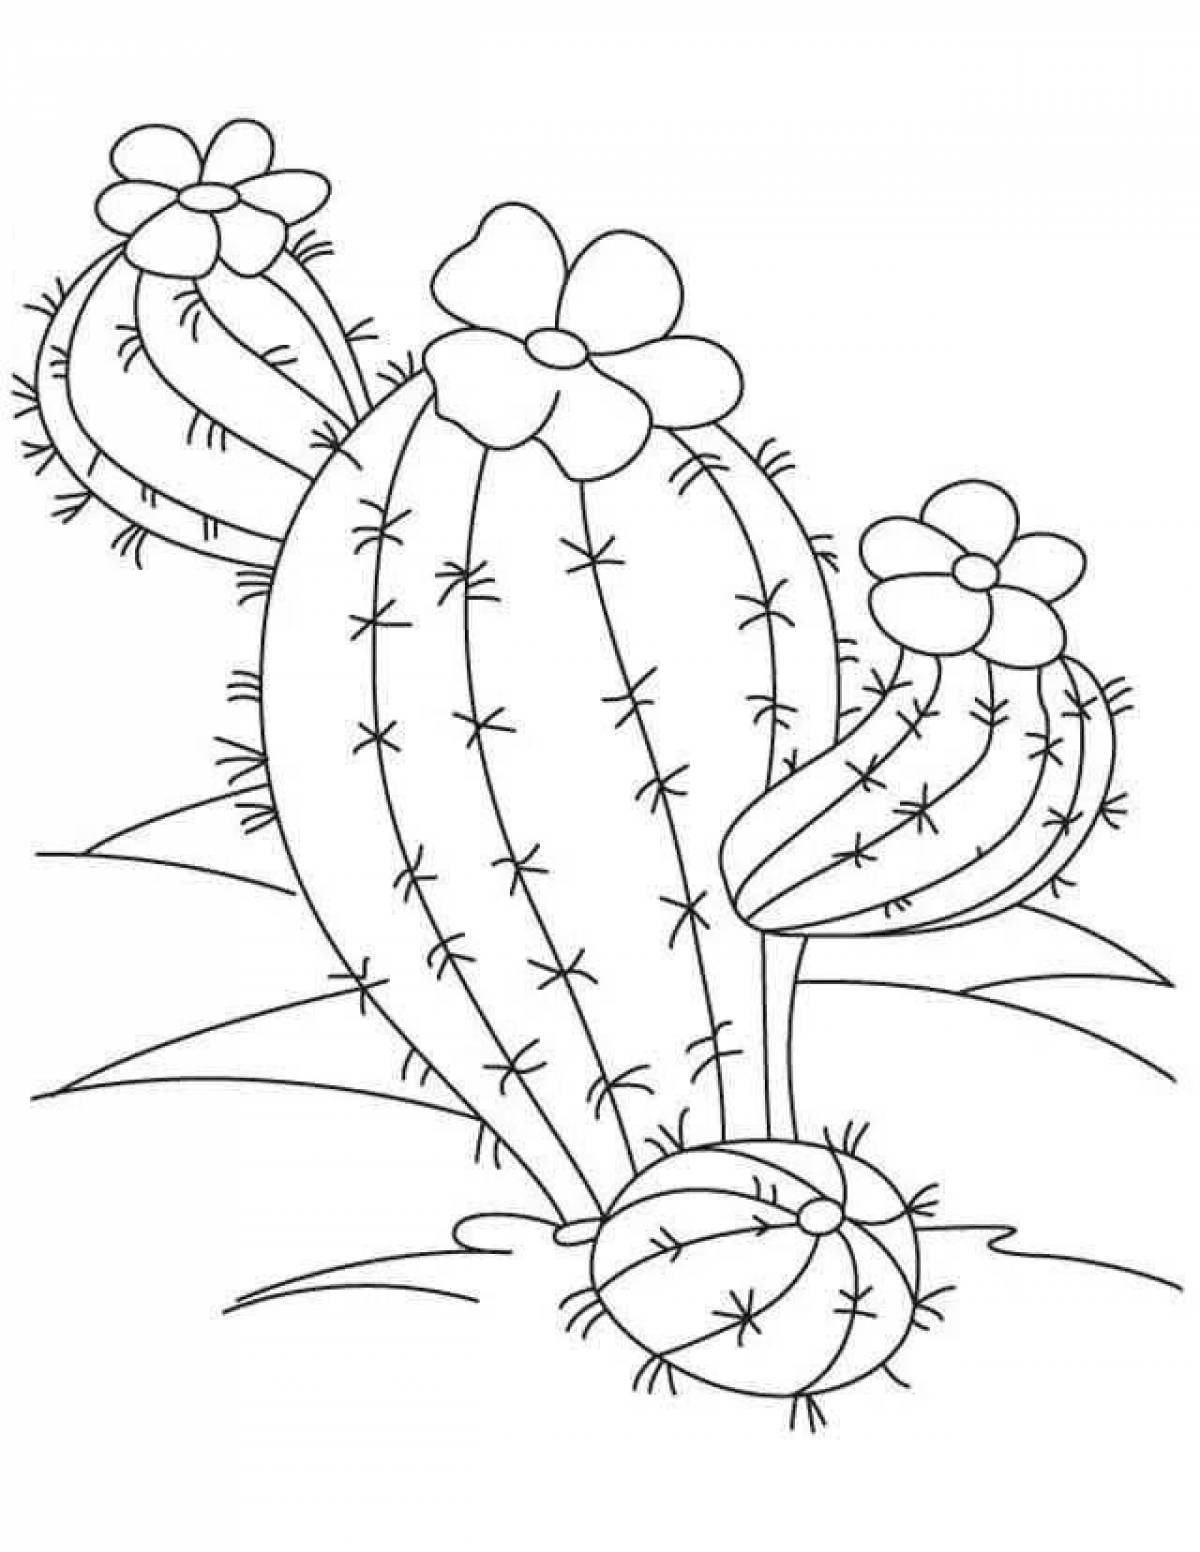 Wonderful cactus coloring book for kids